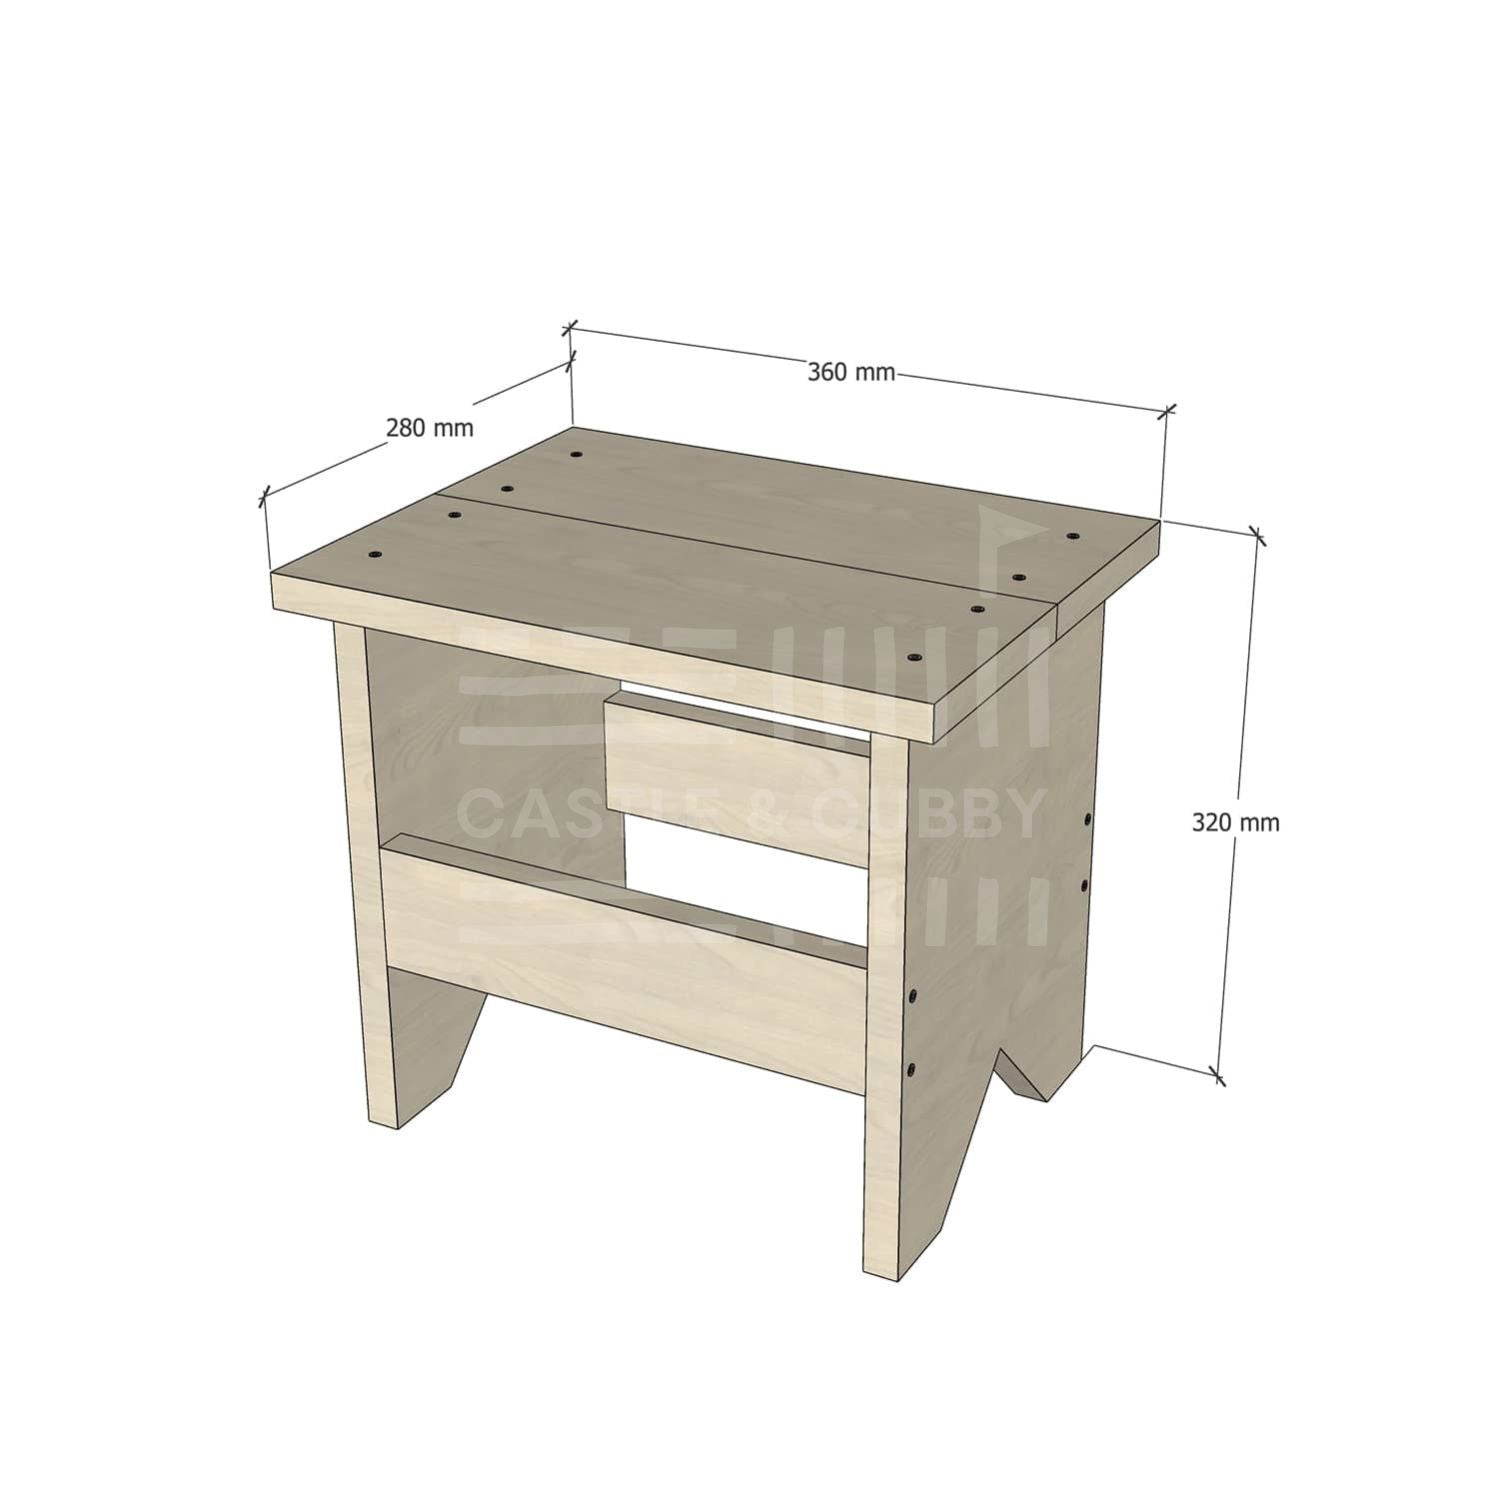 Pine standard size carpenter stool w dimensions